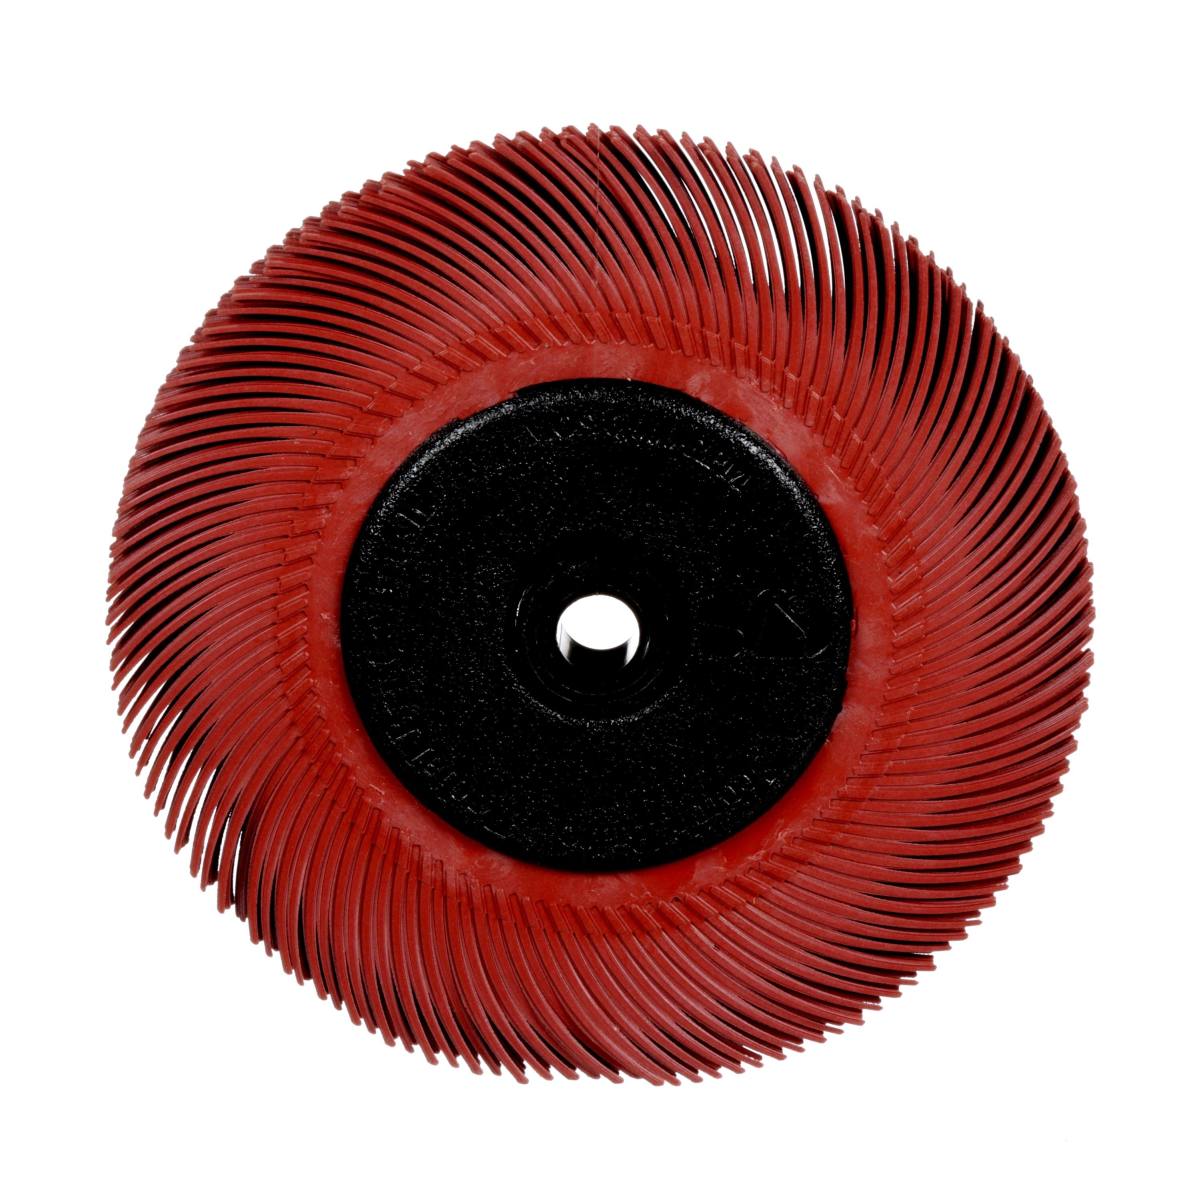 3M Scotch-Brite radiale borstelschijf BB-ZB met flens, rood, 152,4 mm, P220, type C #33213